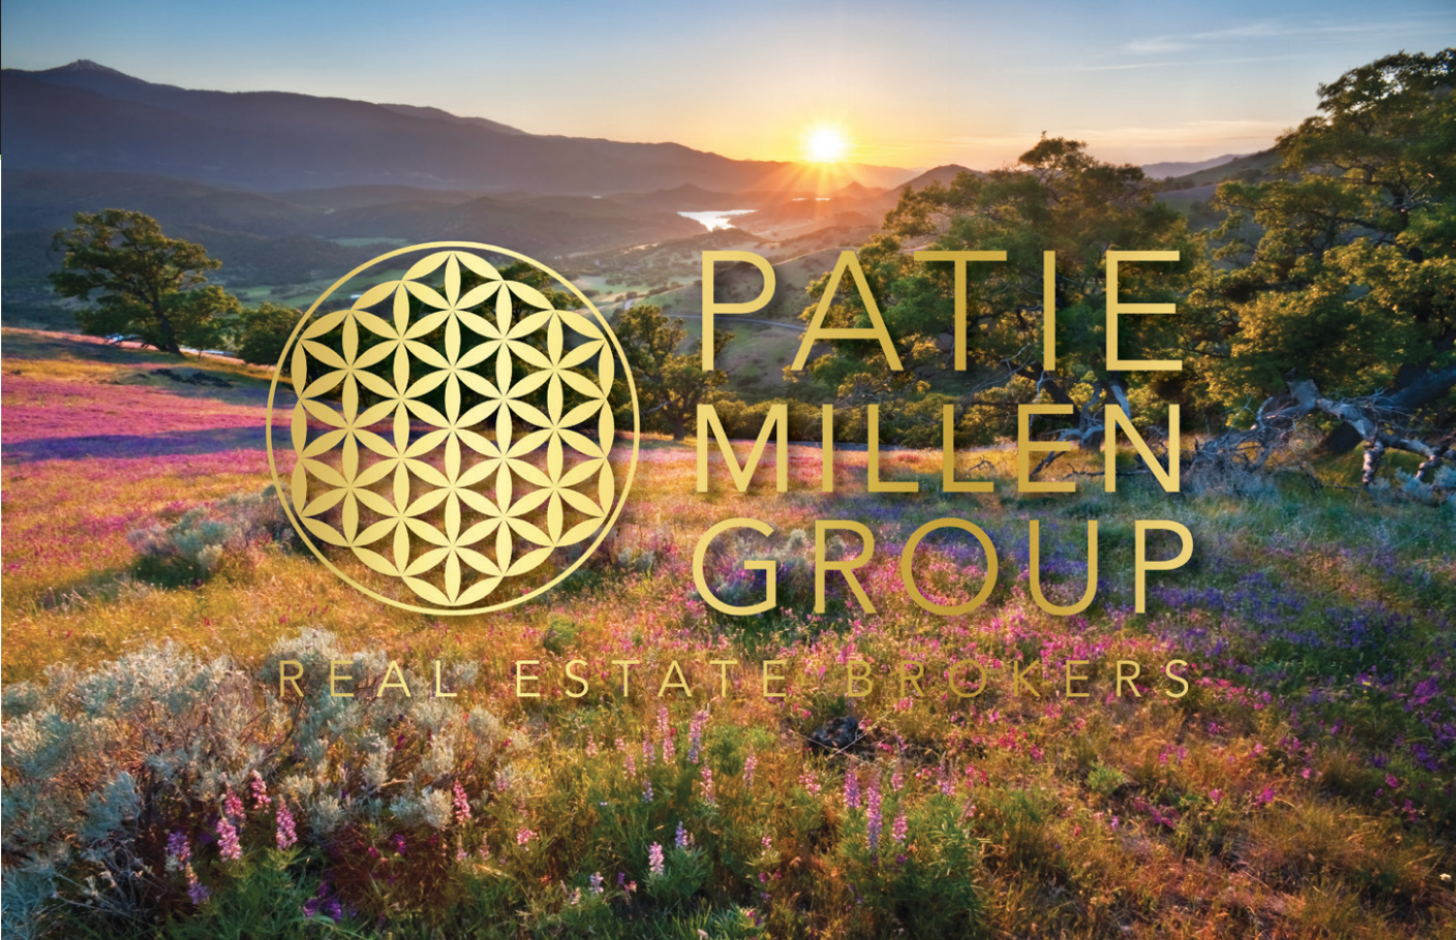 Patie Millen Group 25 Years In Ashland